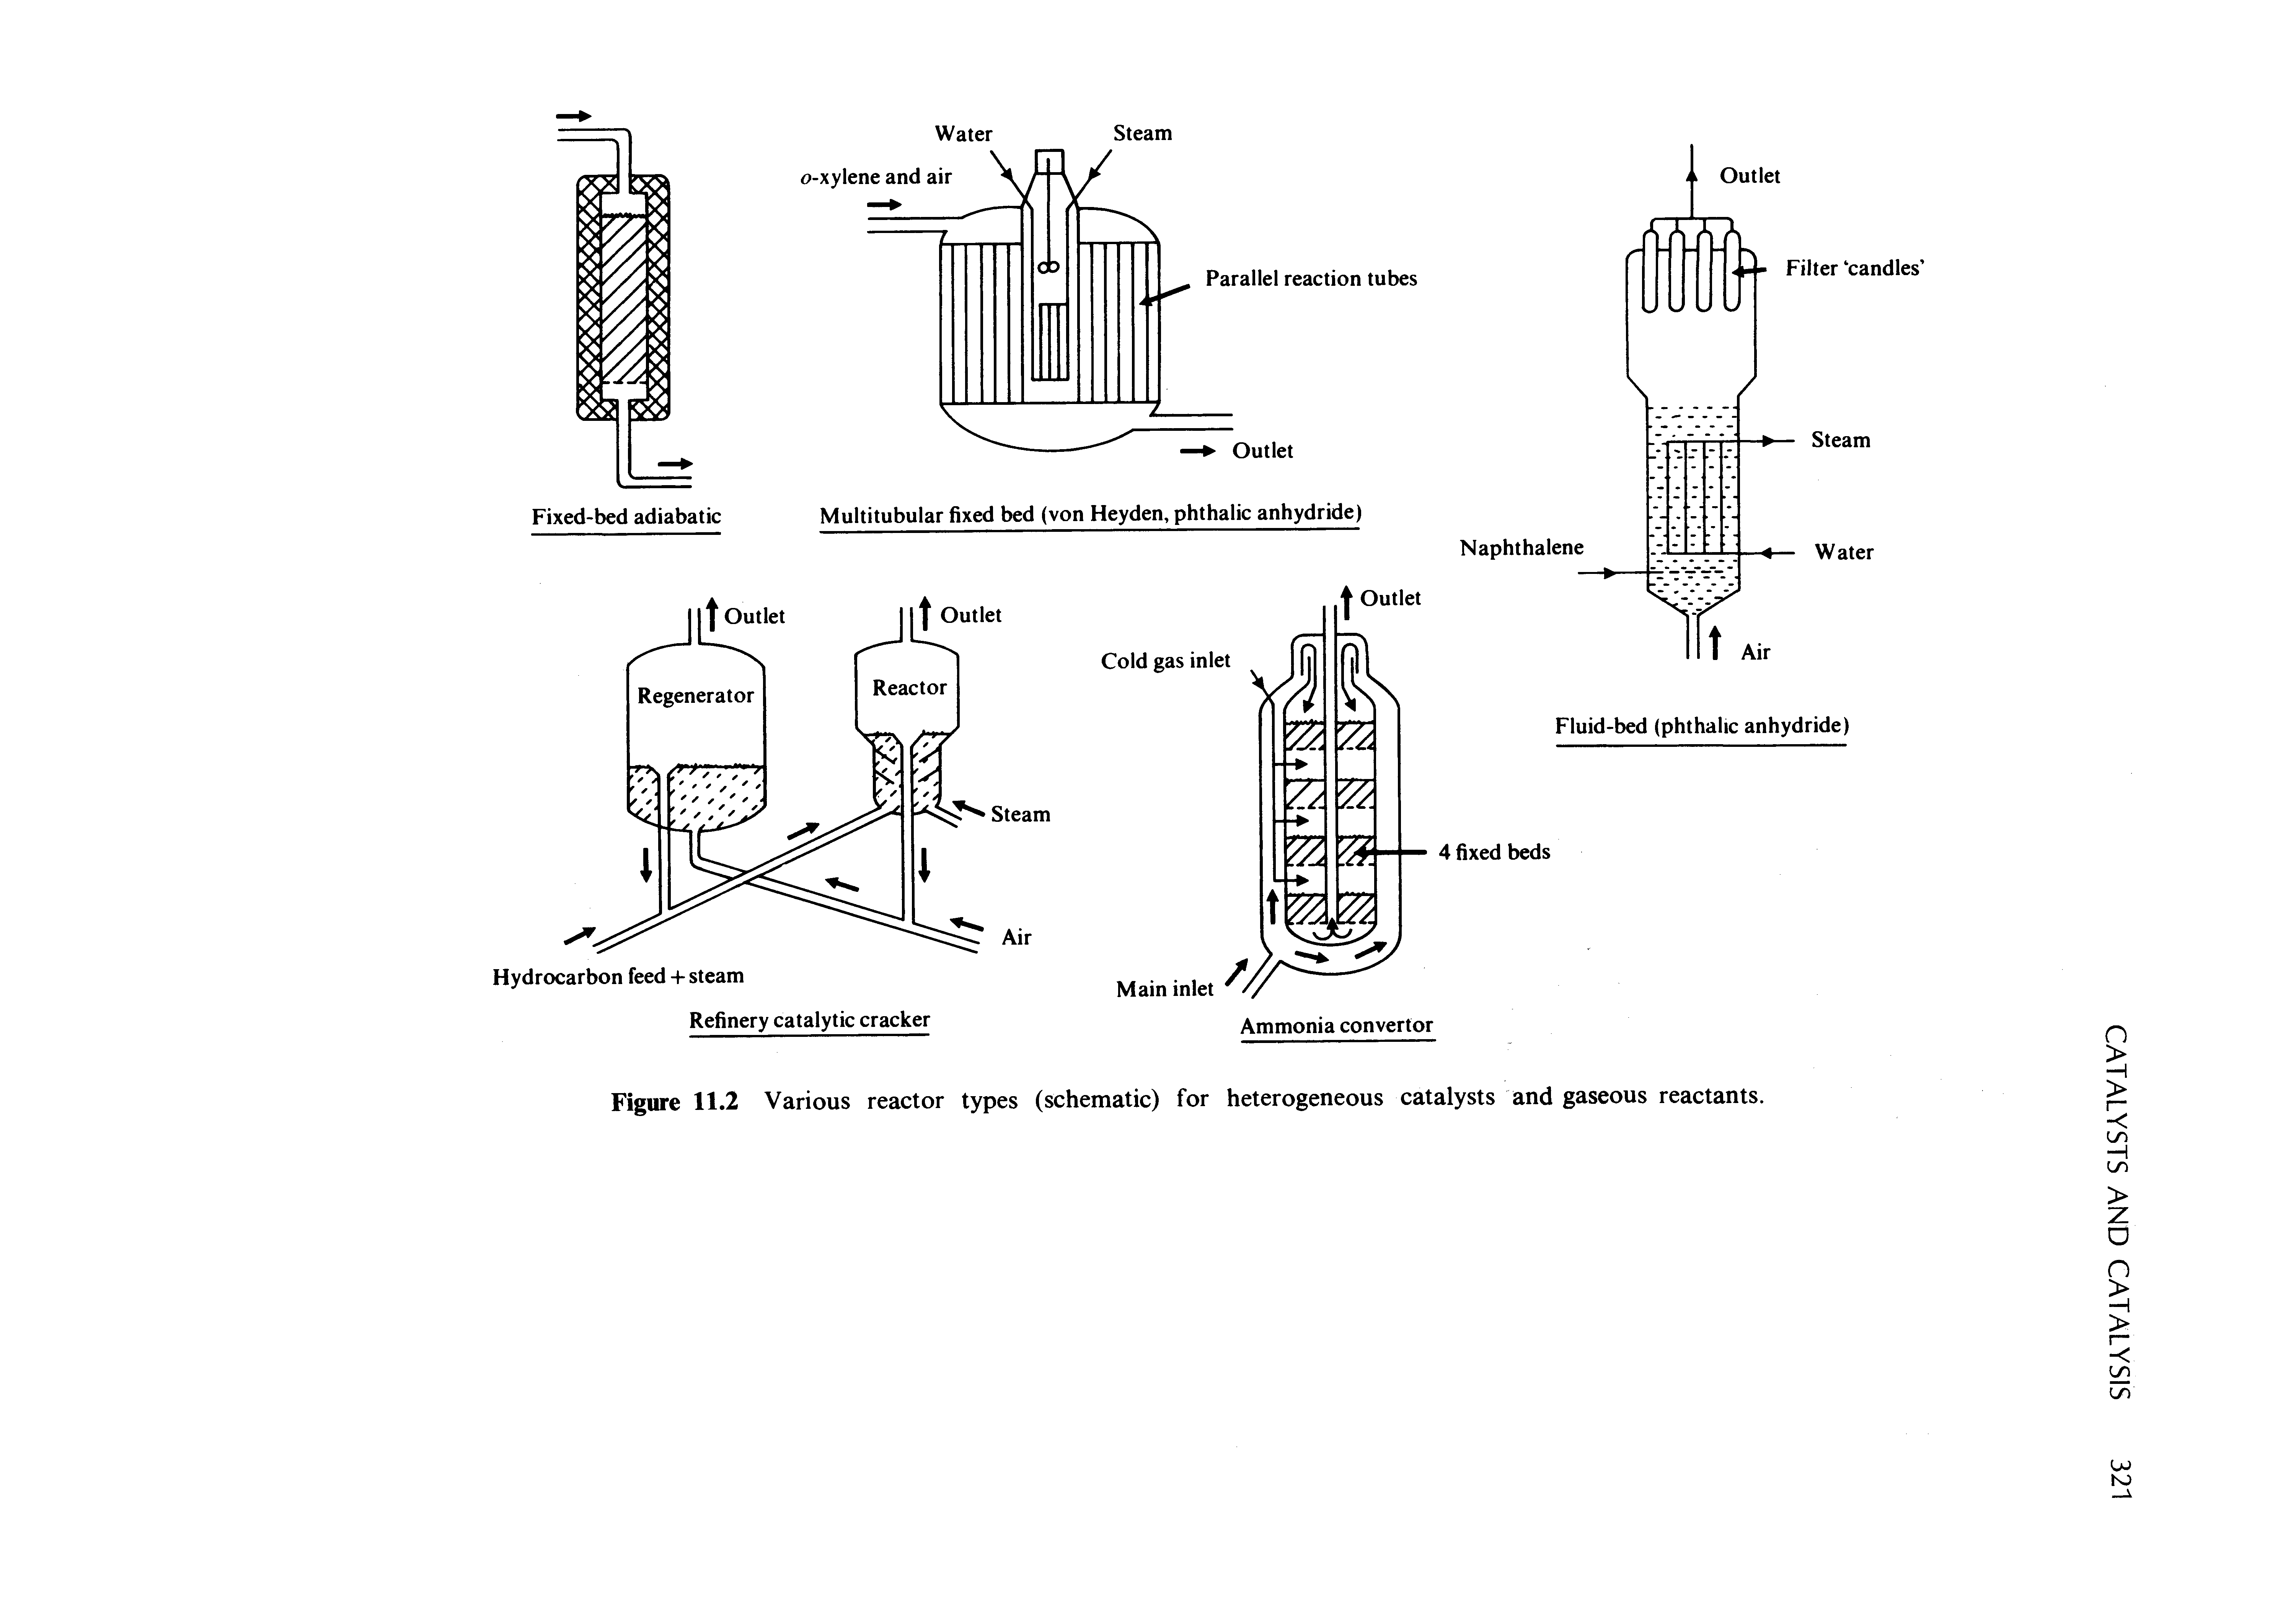 Figure 11.2 Various reactor types (schematic) for heterogeneous catalysts and gaseous reactants.